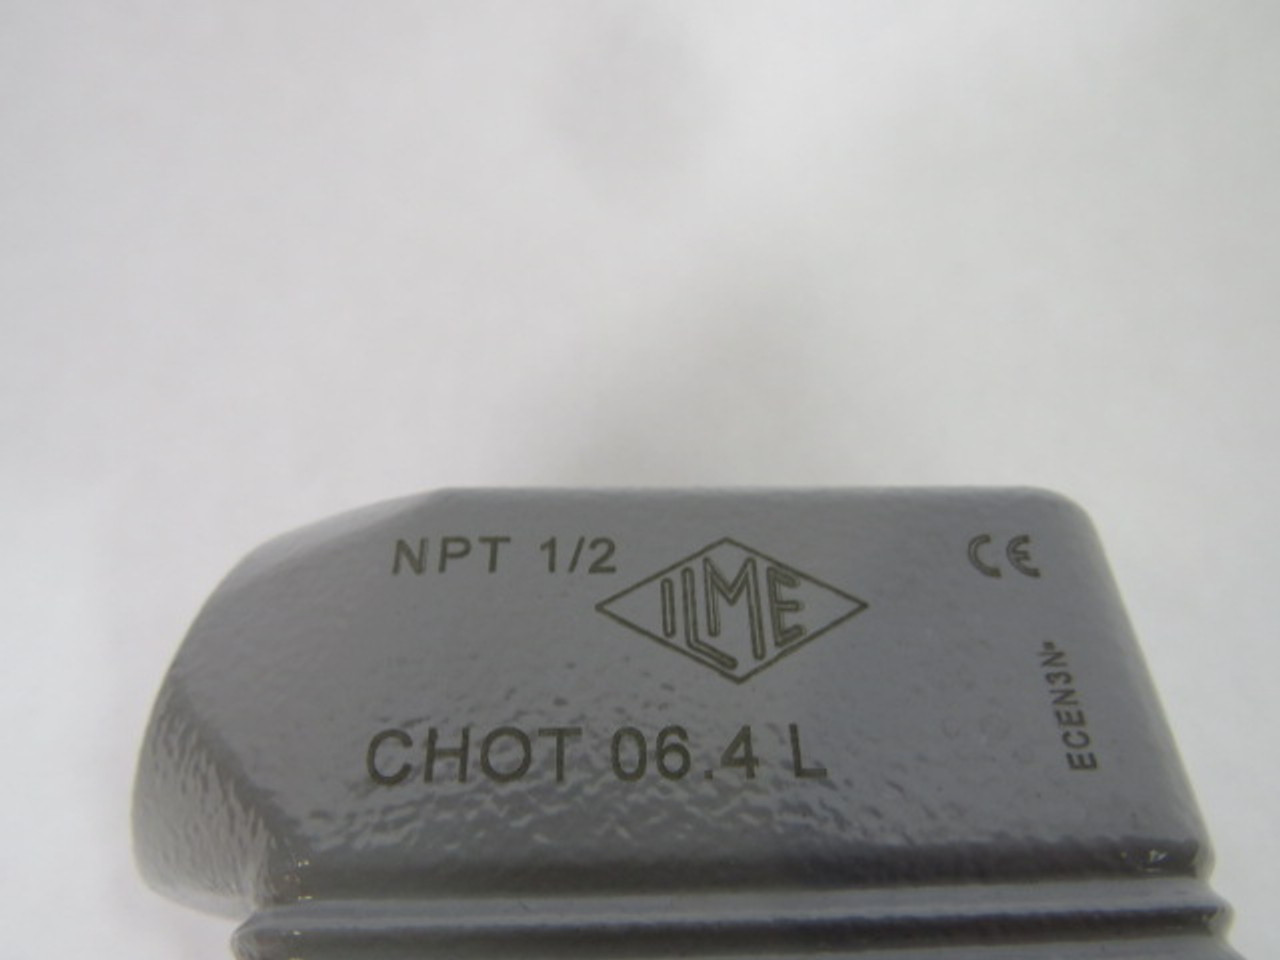 Ilme CHOT-06.4L Side Top Entry Hood 1/2" NPT USED